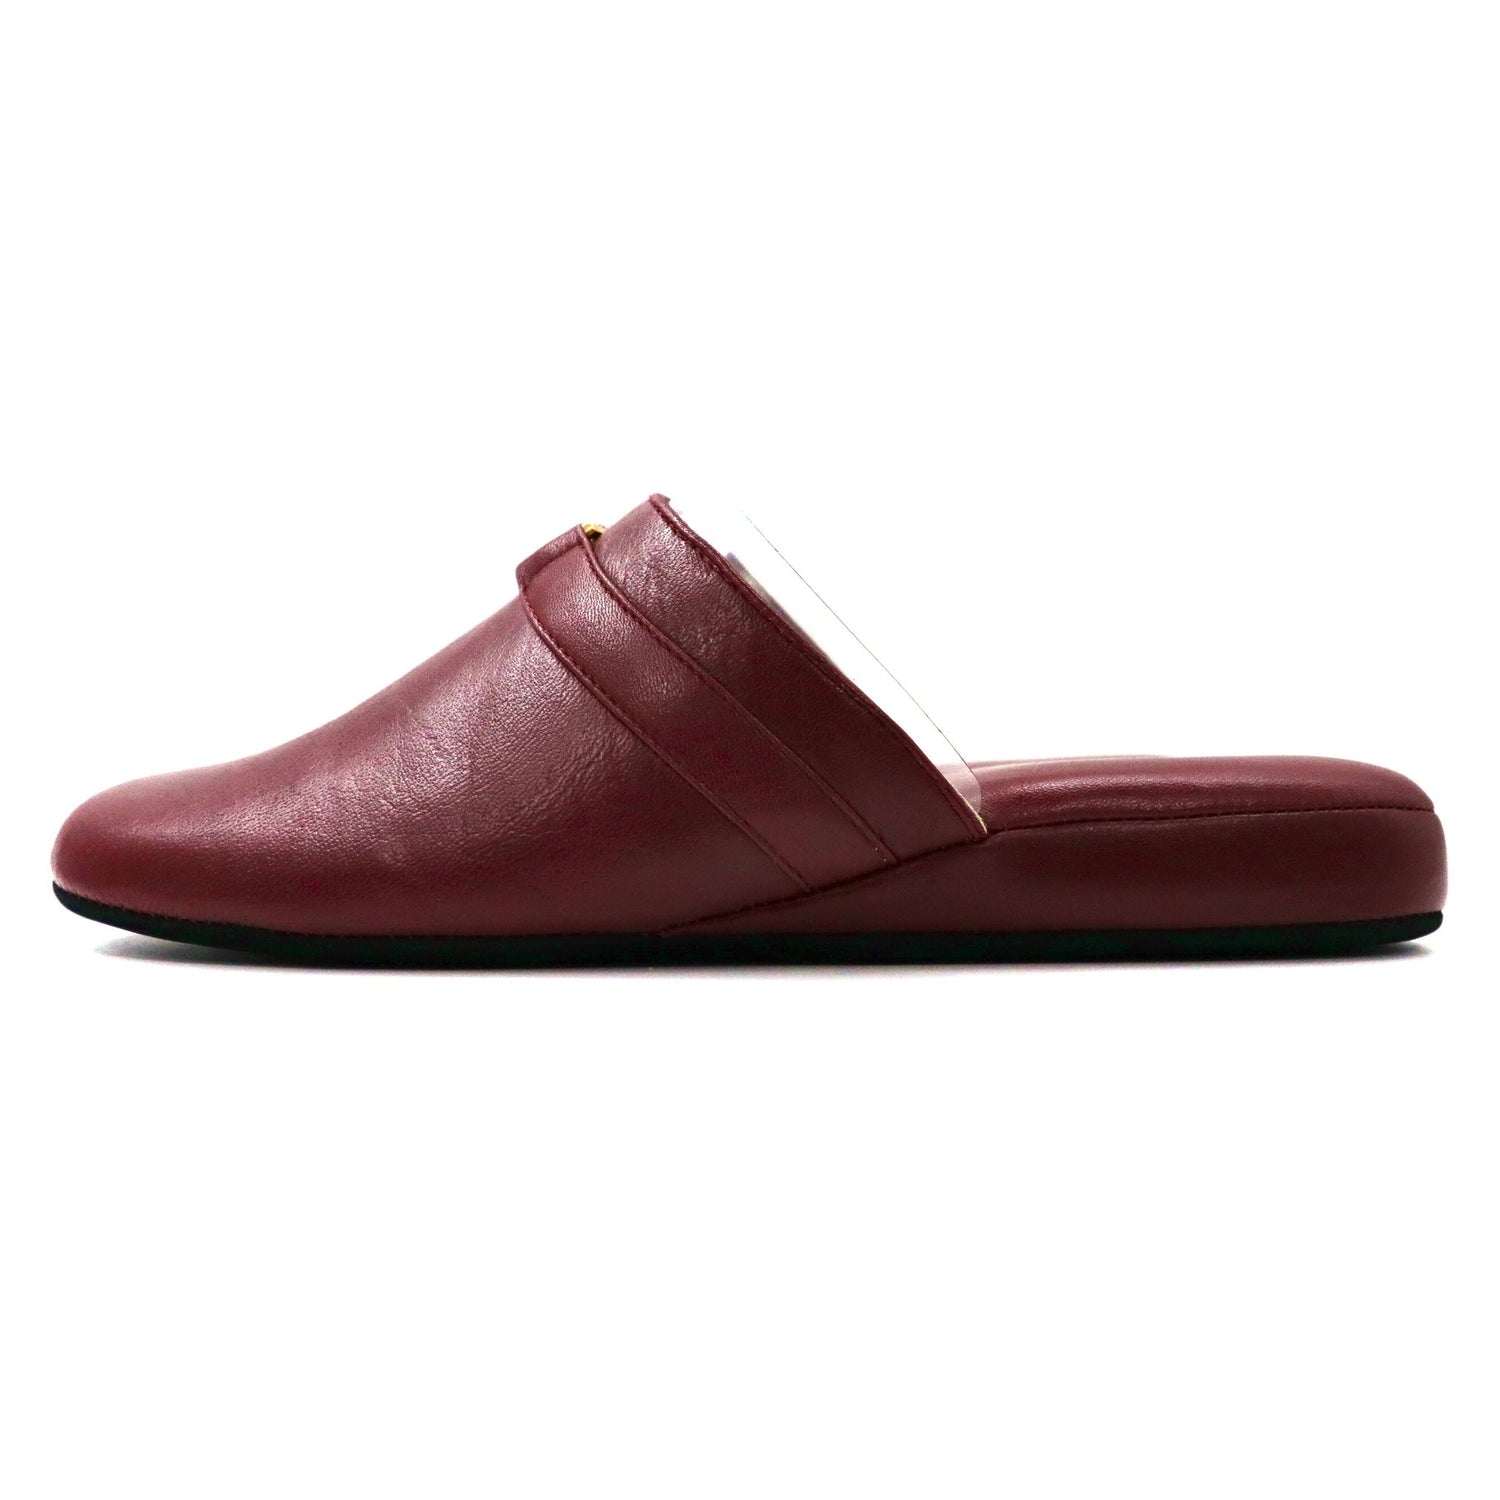 Yves Saint Laurent Room Shoes Slippers US7 BORDEAUX Leather YSL